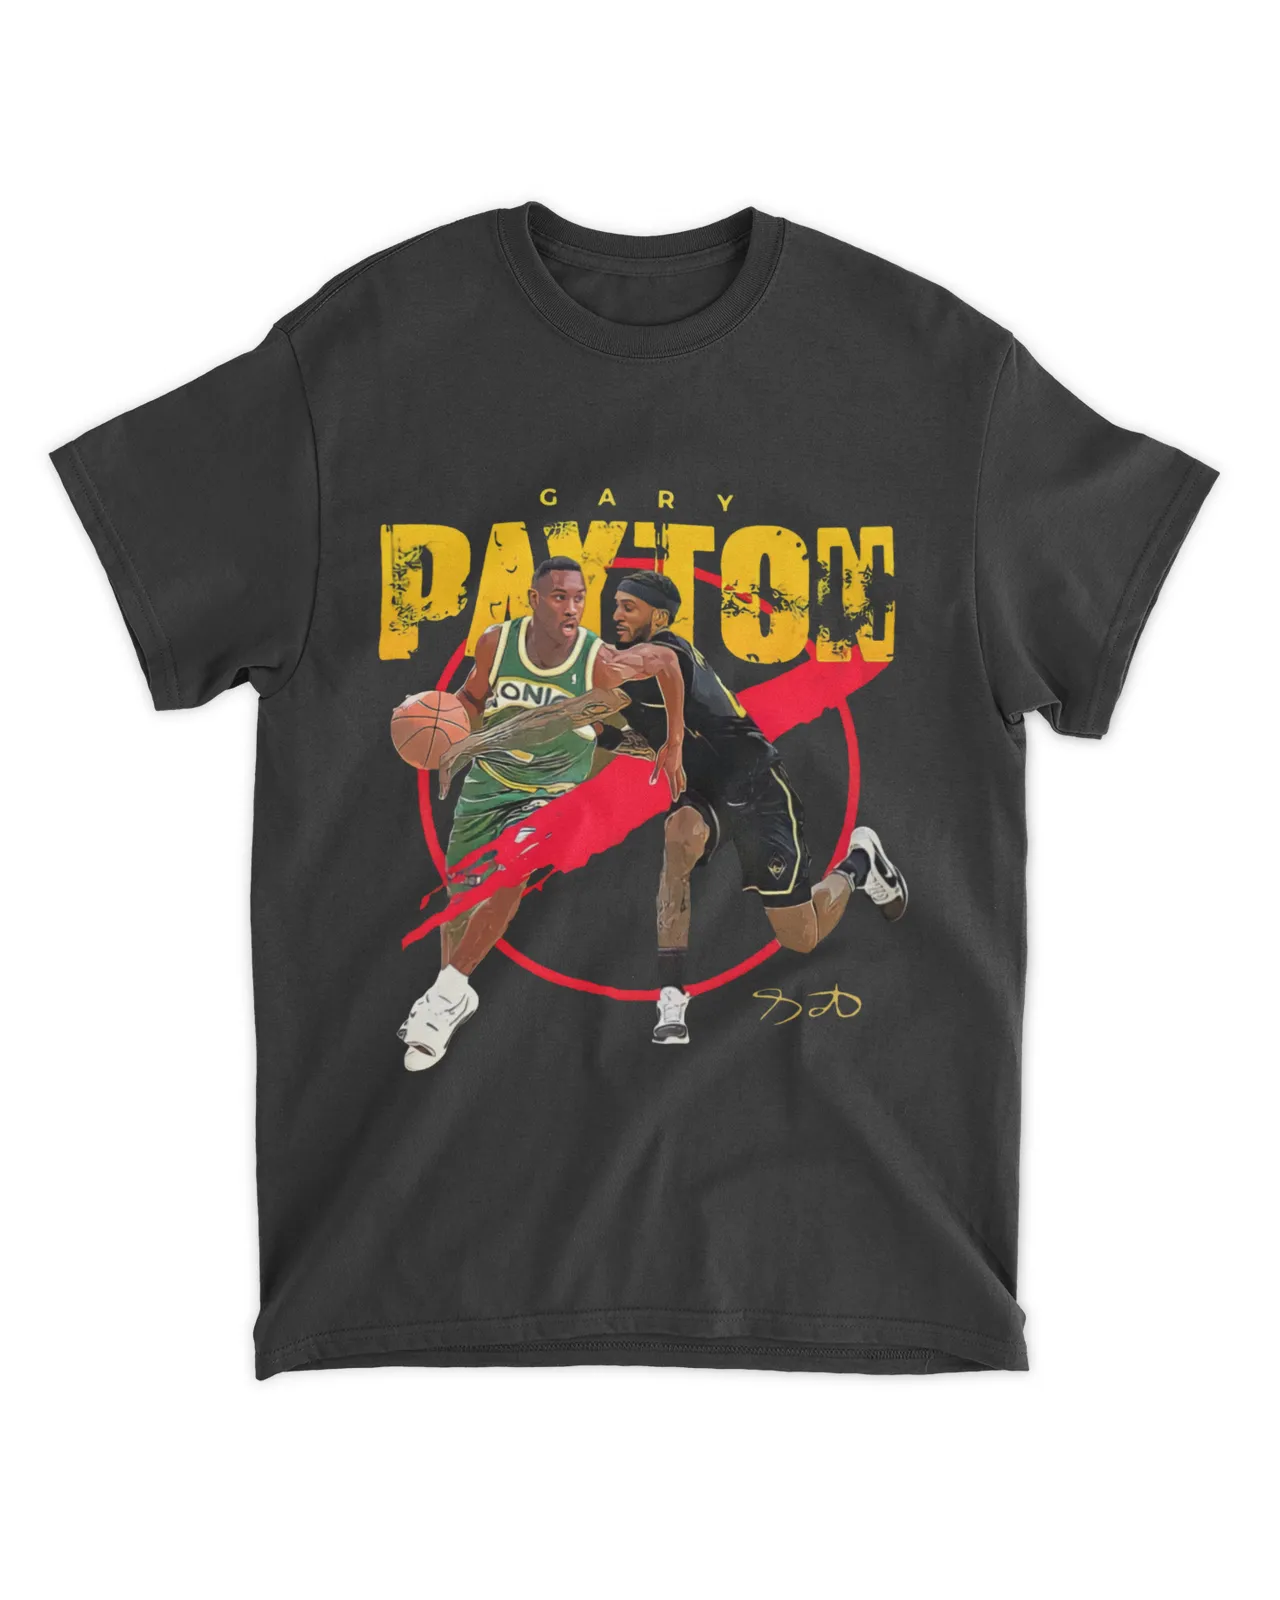 Gary Payton being guarded by Gary Payton II Shirt 